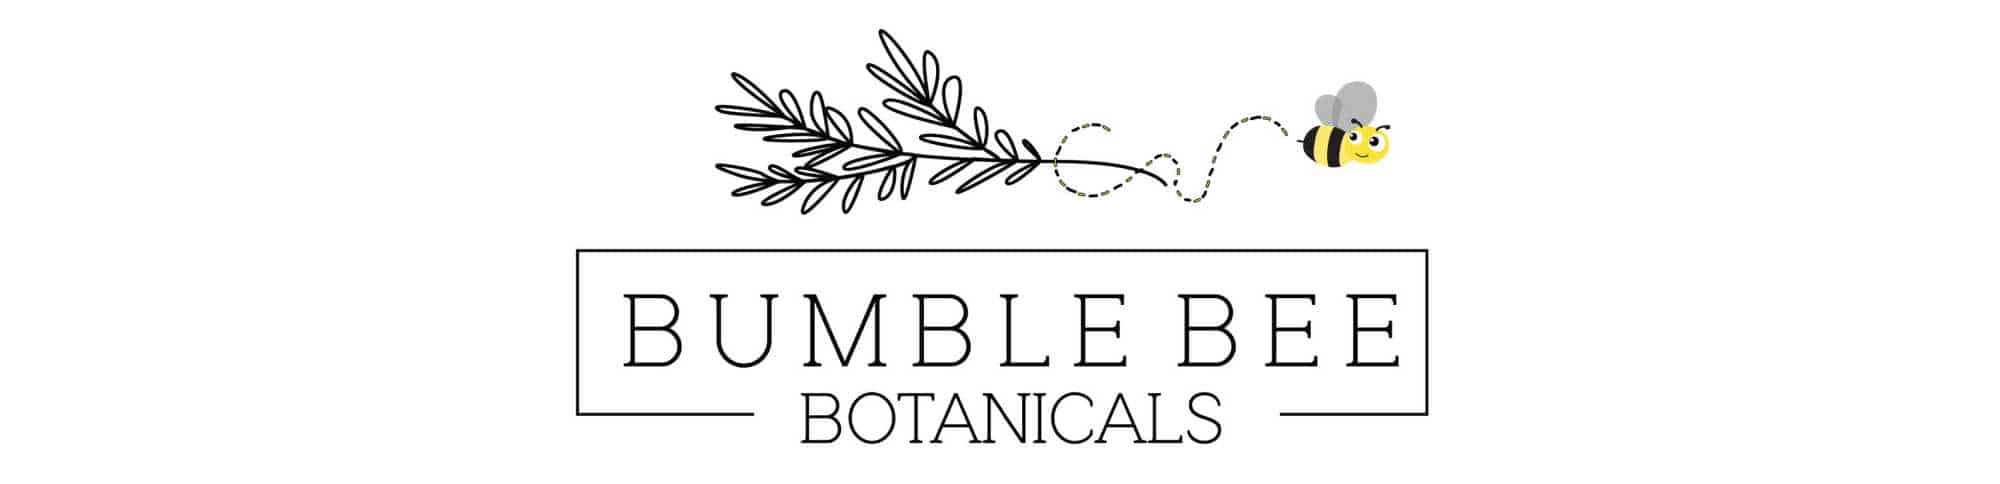 image of bumble bee botanicals